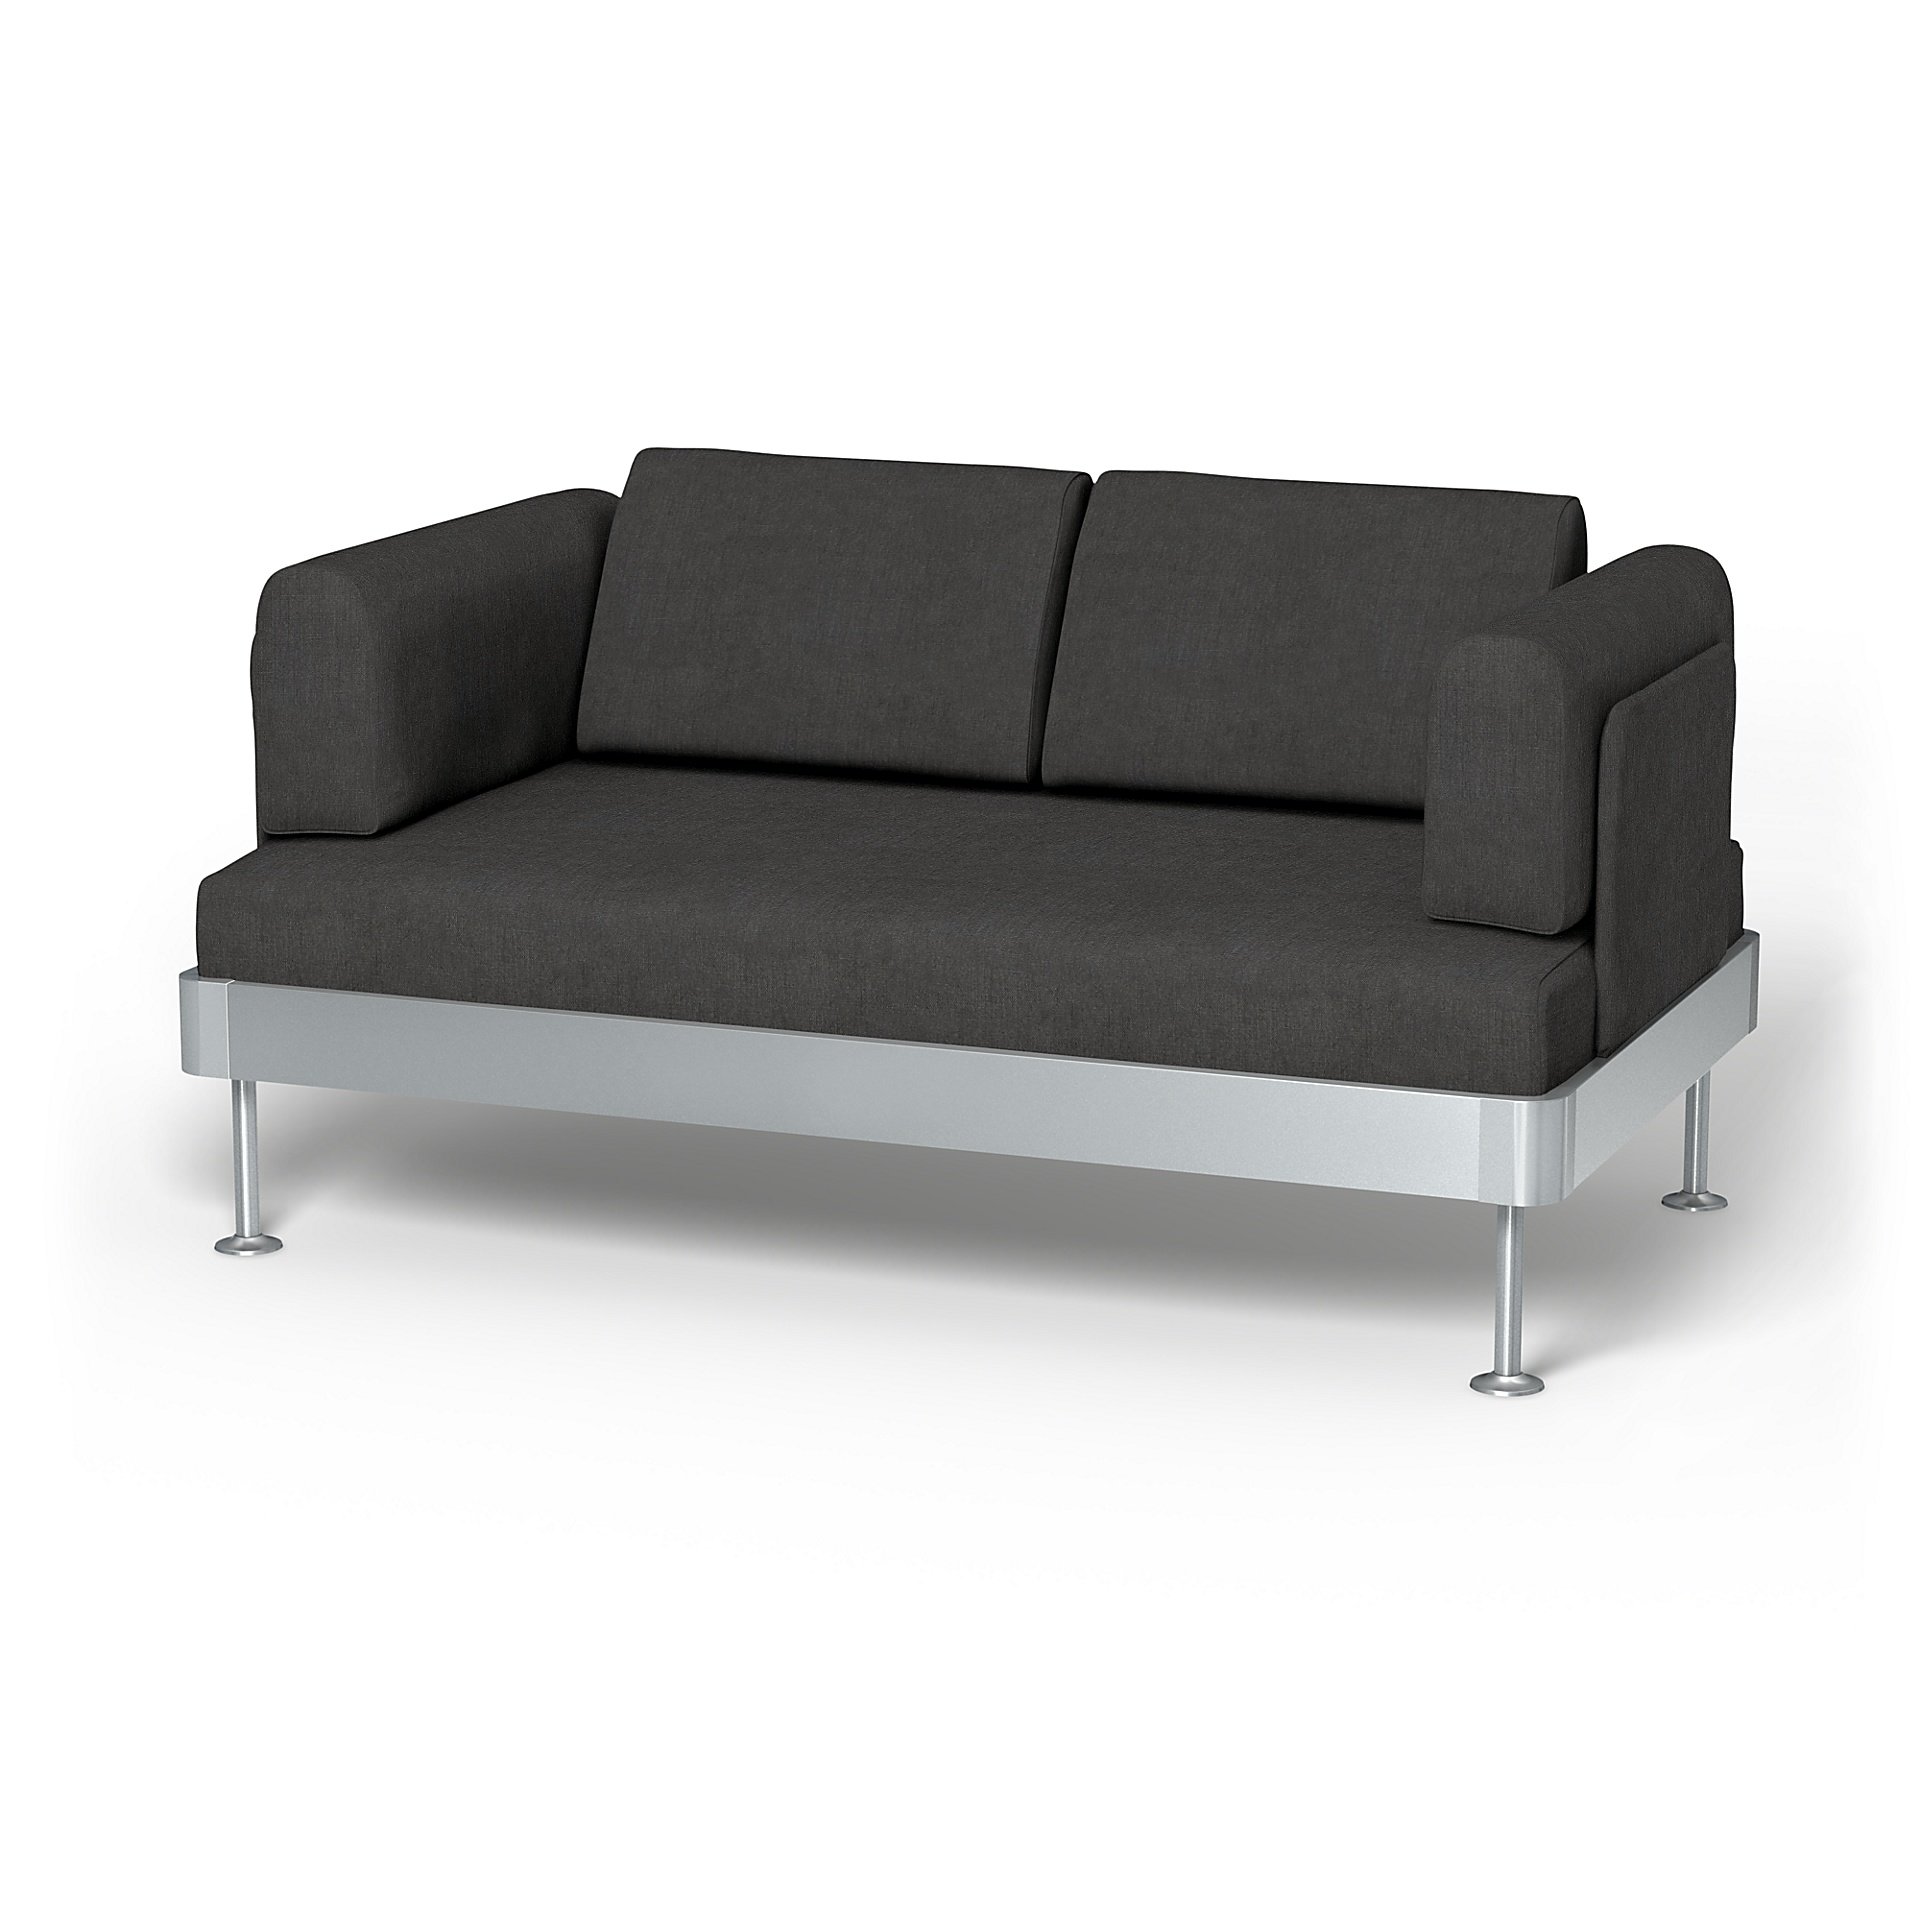 IKEA - Delaktig 2 Seater Sofa Cover, Espresso, Linen - Bemz